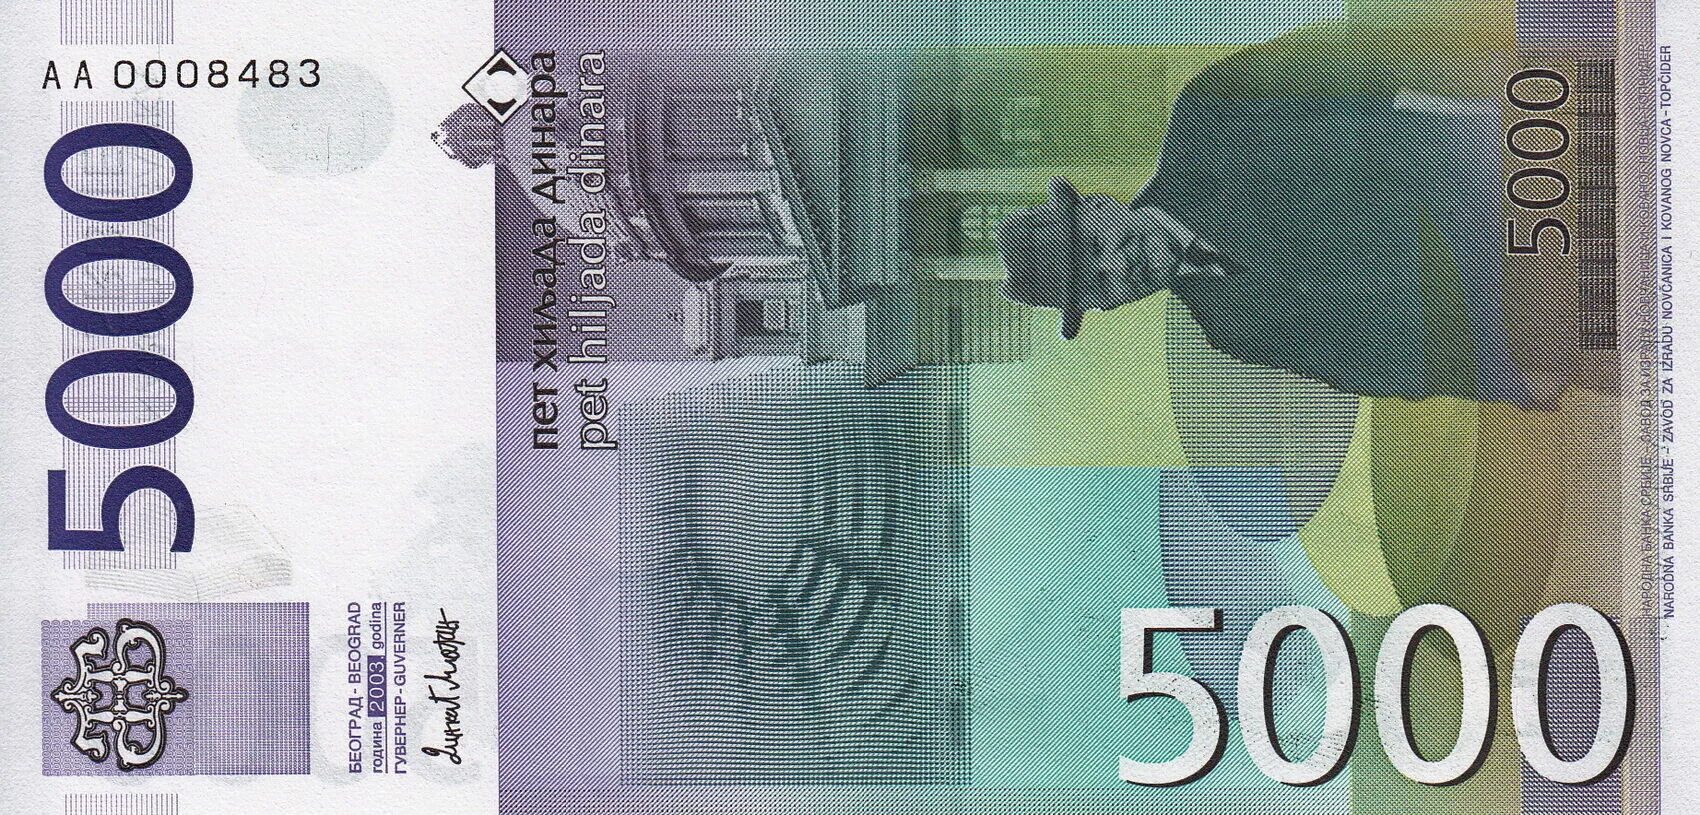 5000 Евро купюра. 5000 Сербских динаров купюра. 5 Тысяч евро купюра.